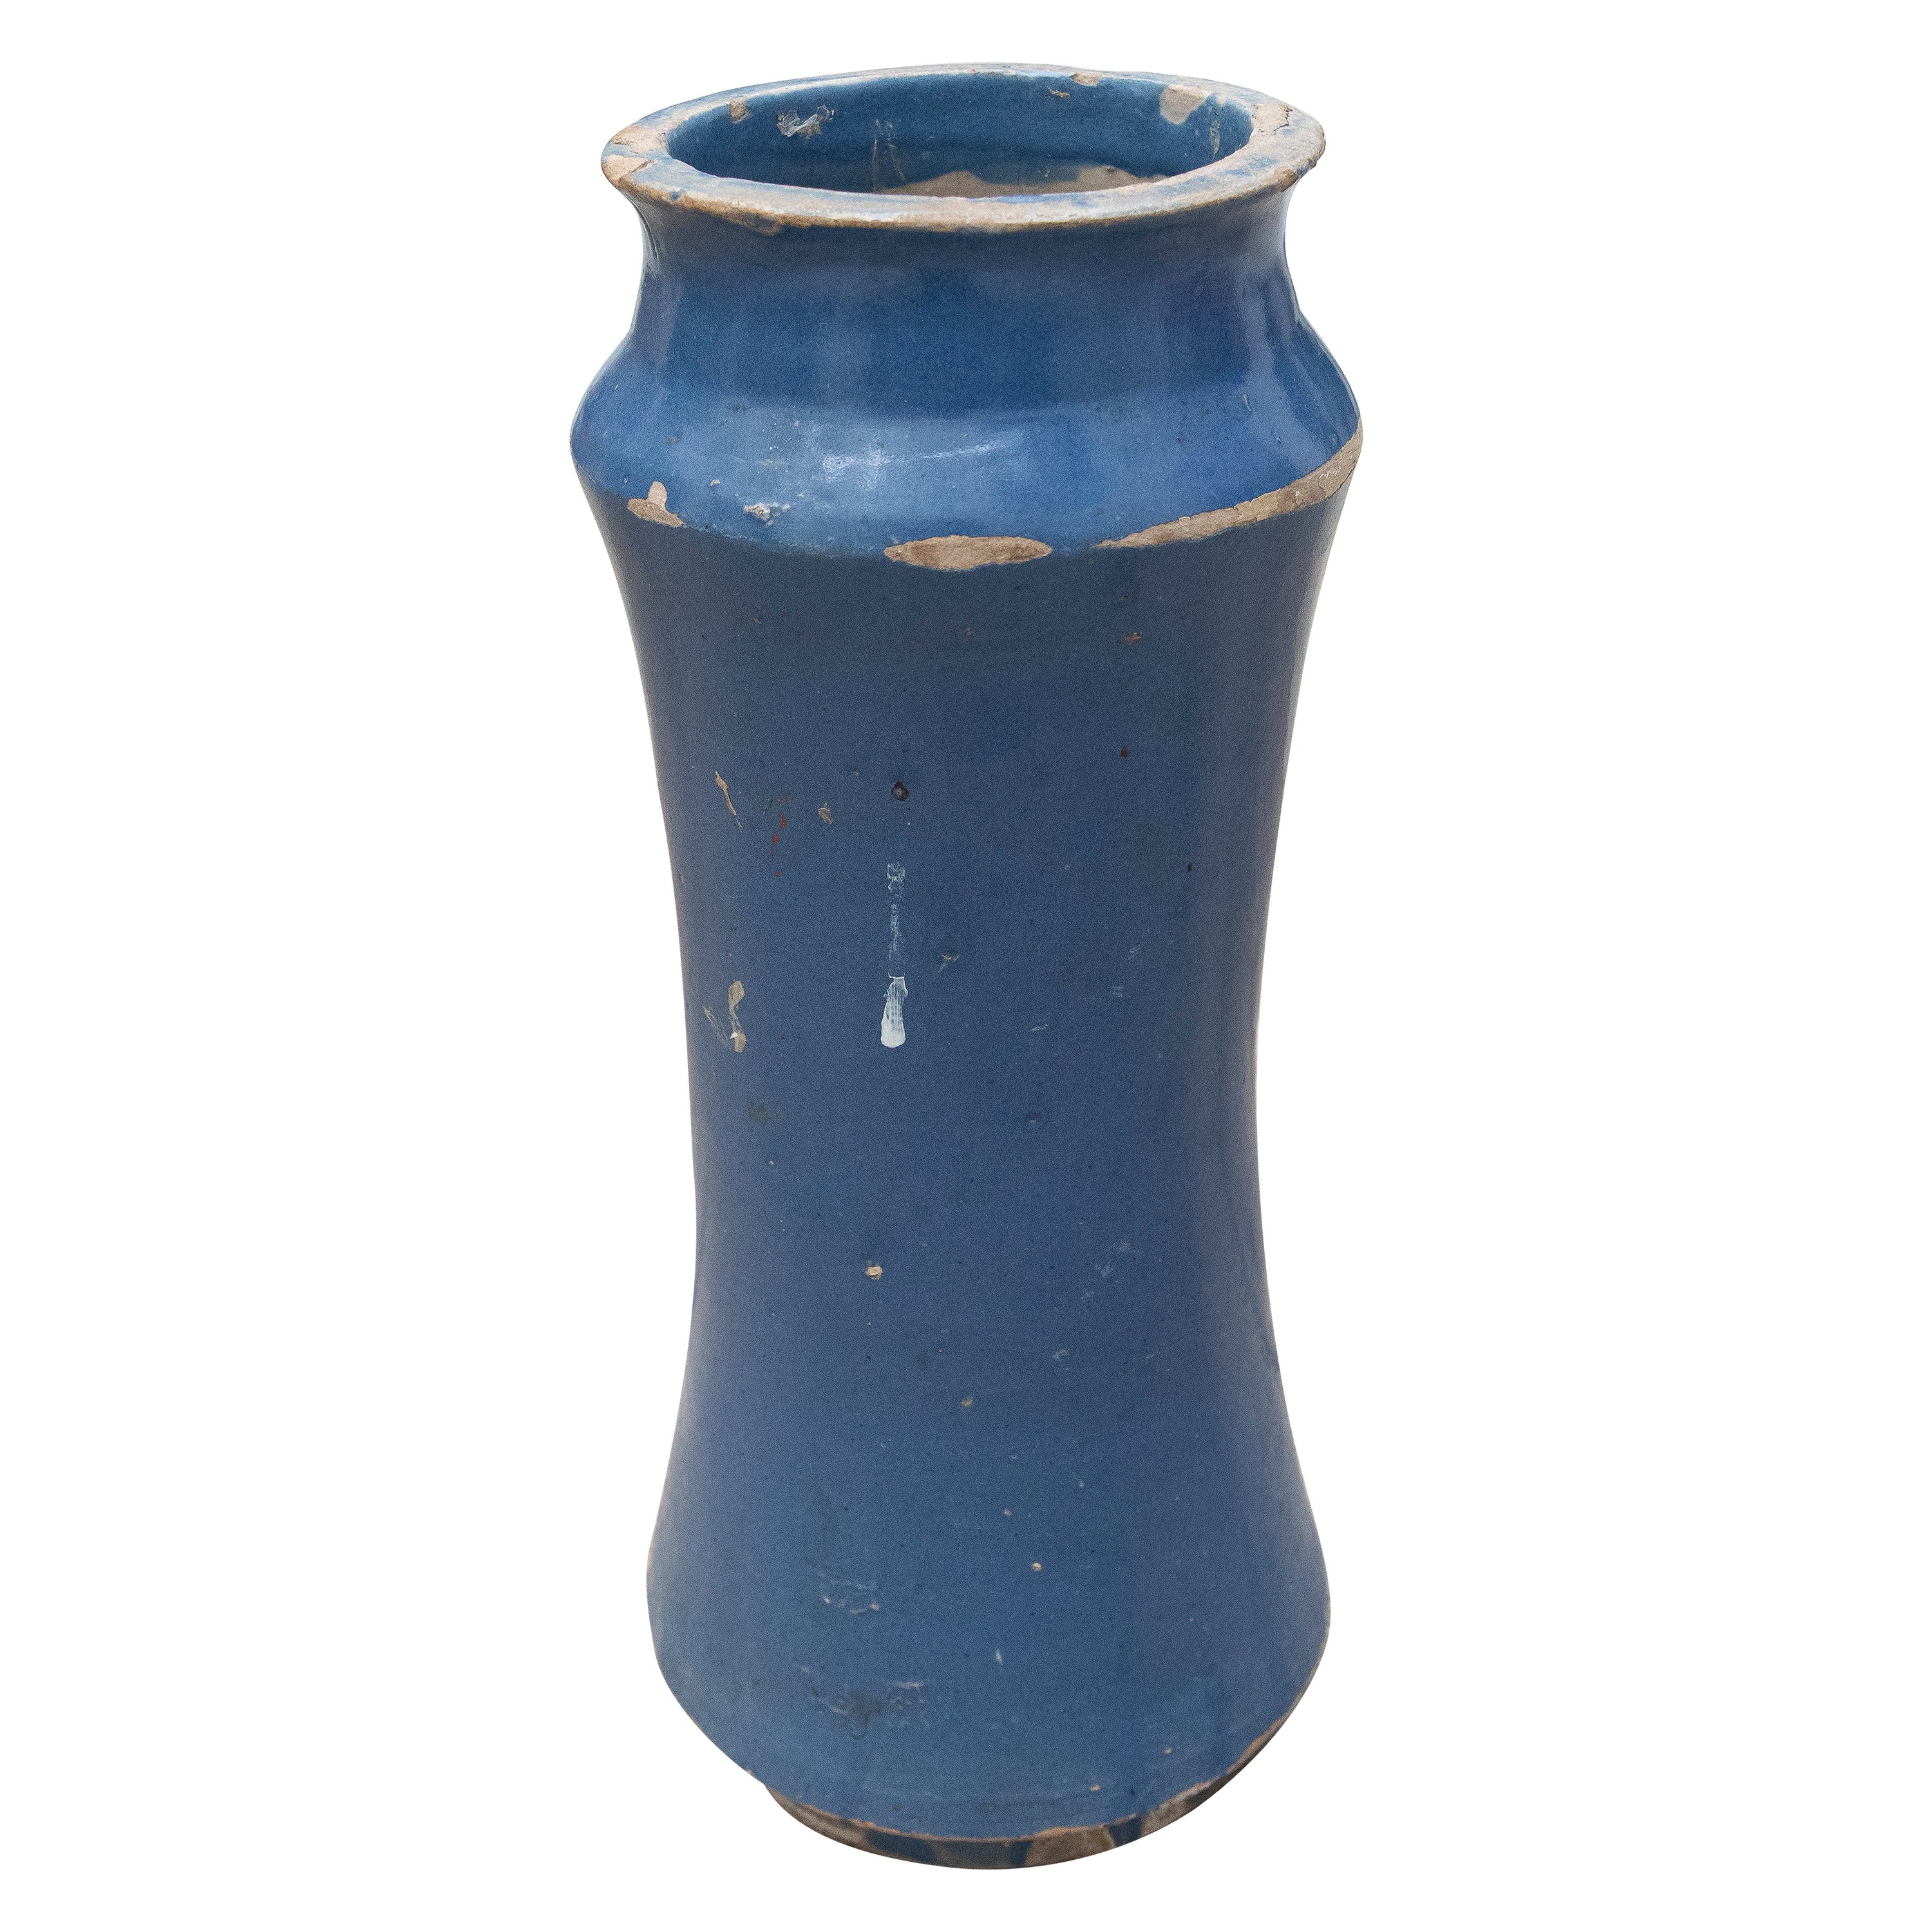 18th Century Indigo Blue Glazed Ceramic Jar